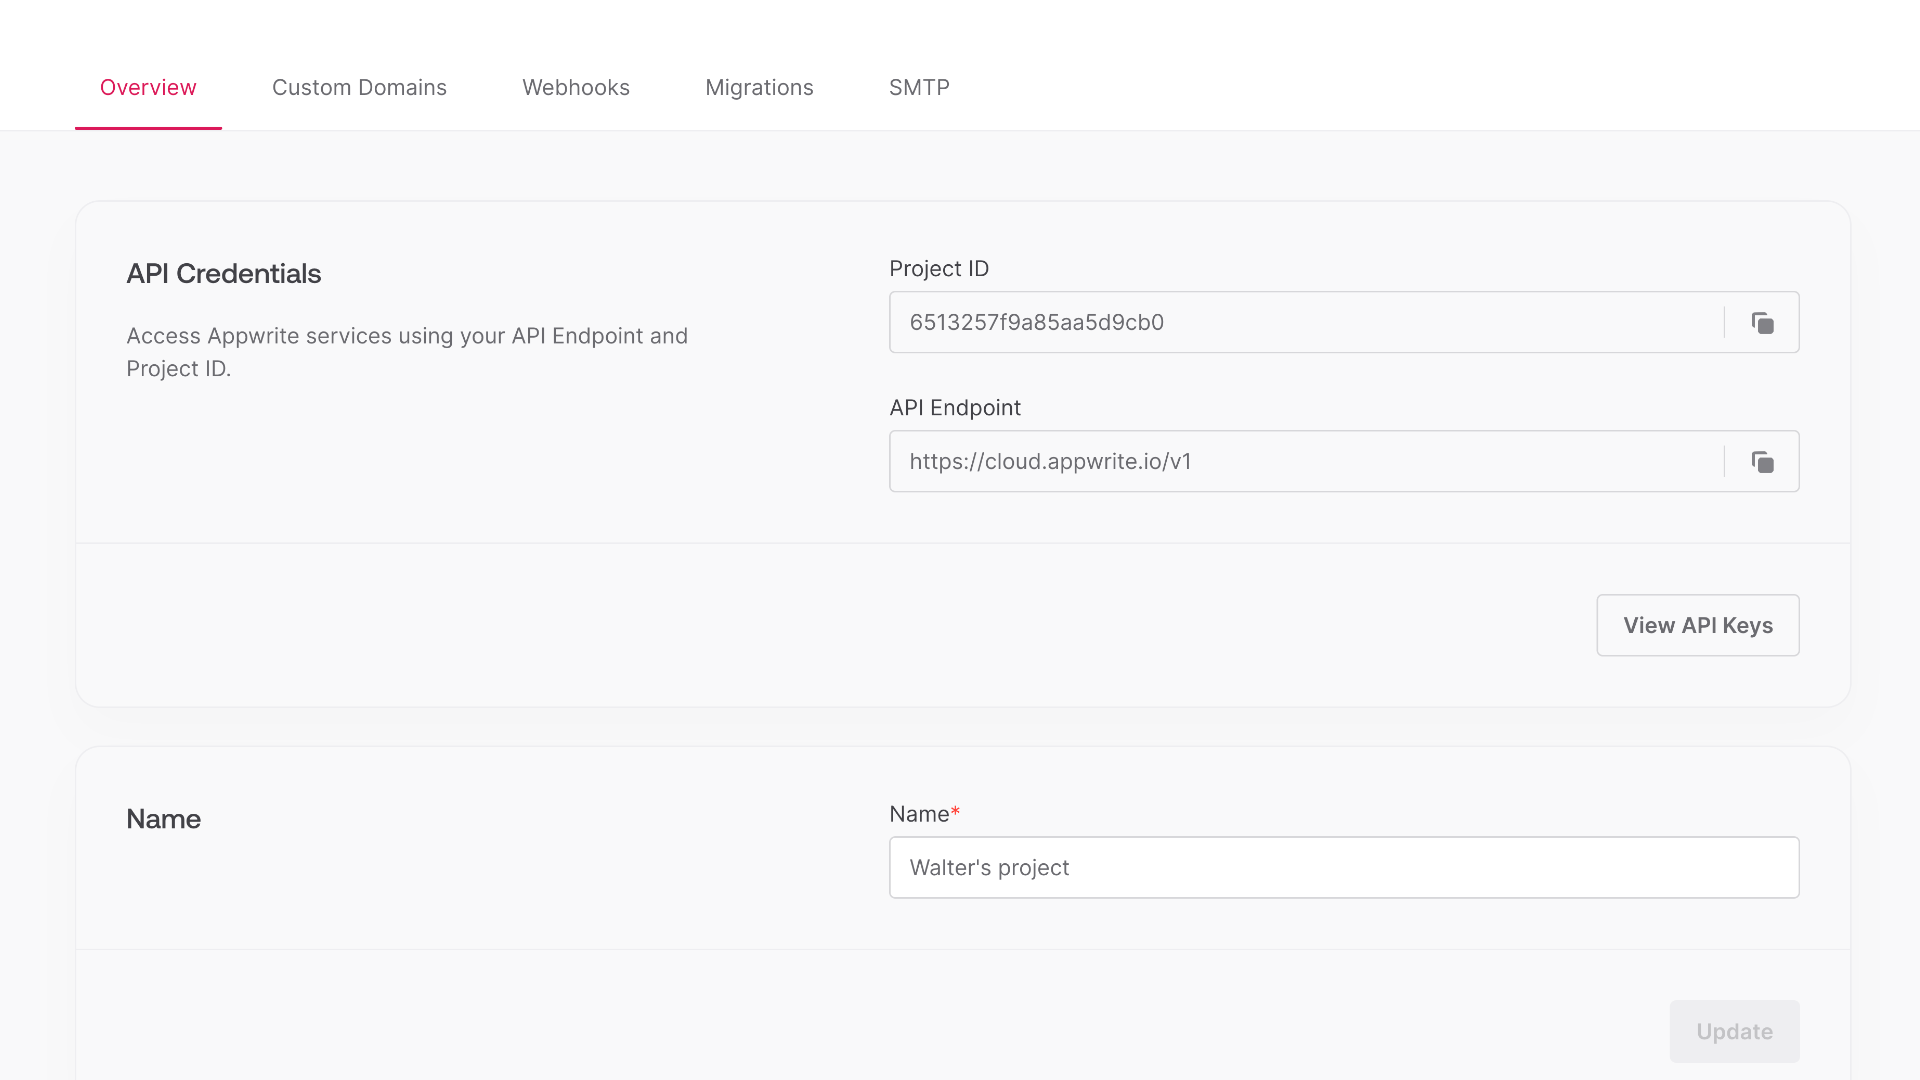 Project settings screen